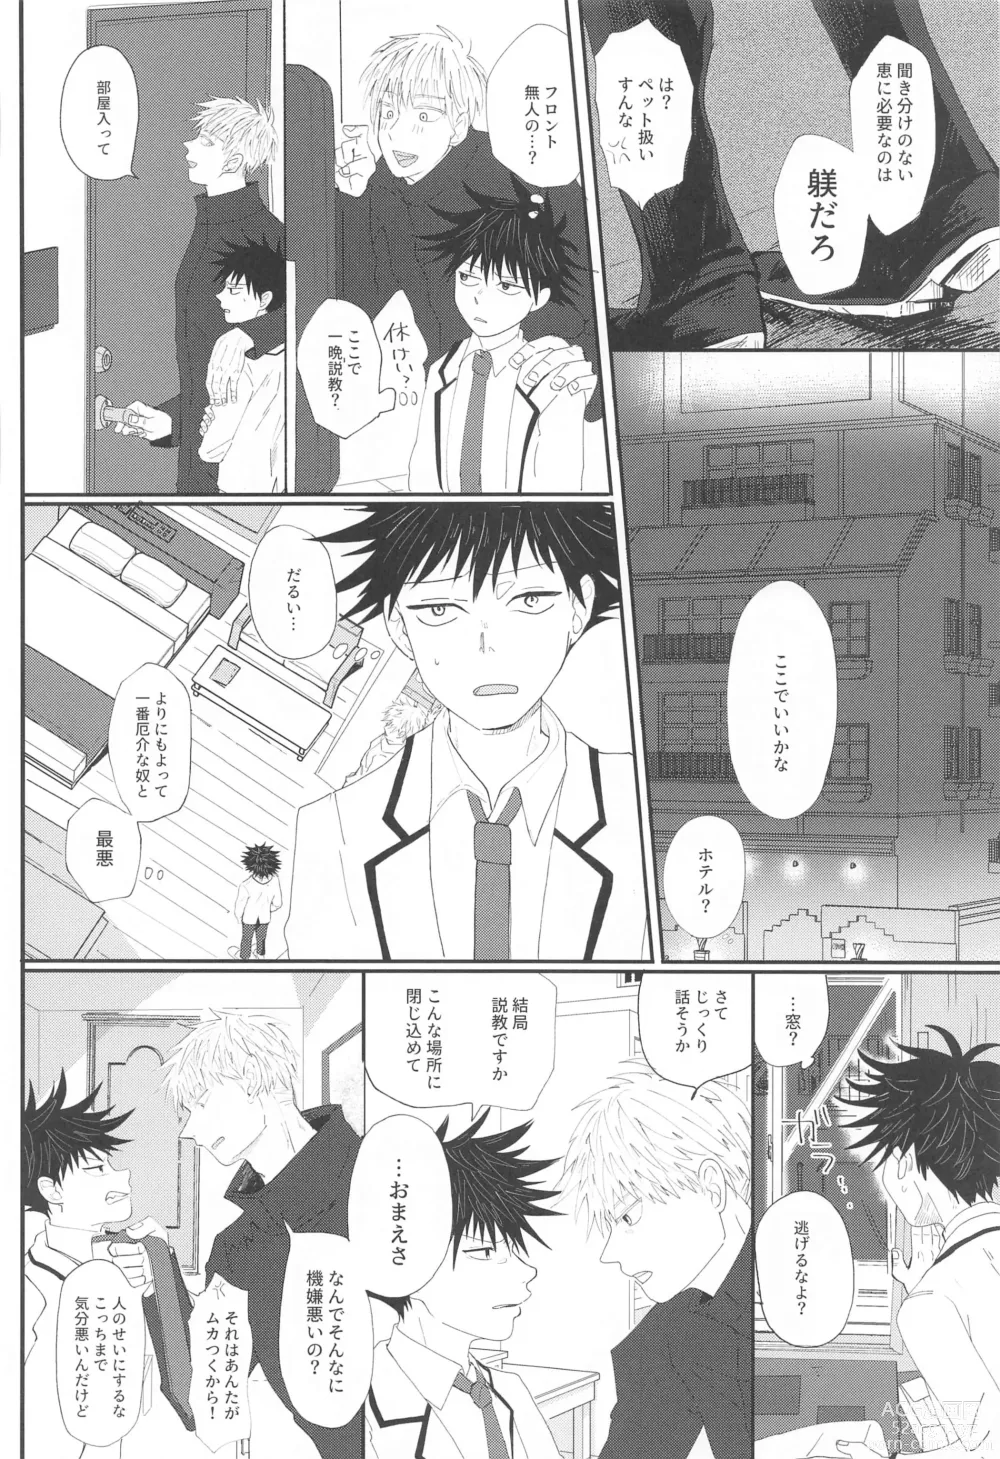 Page 7 of doujinshi Fusenai Inu